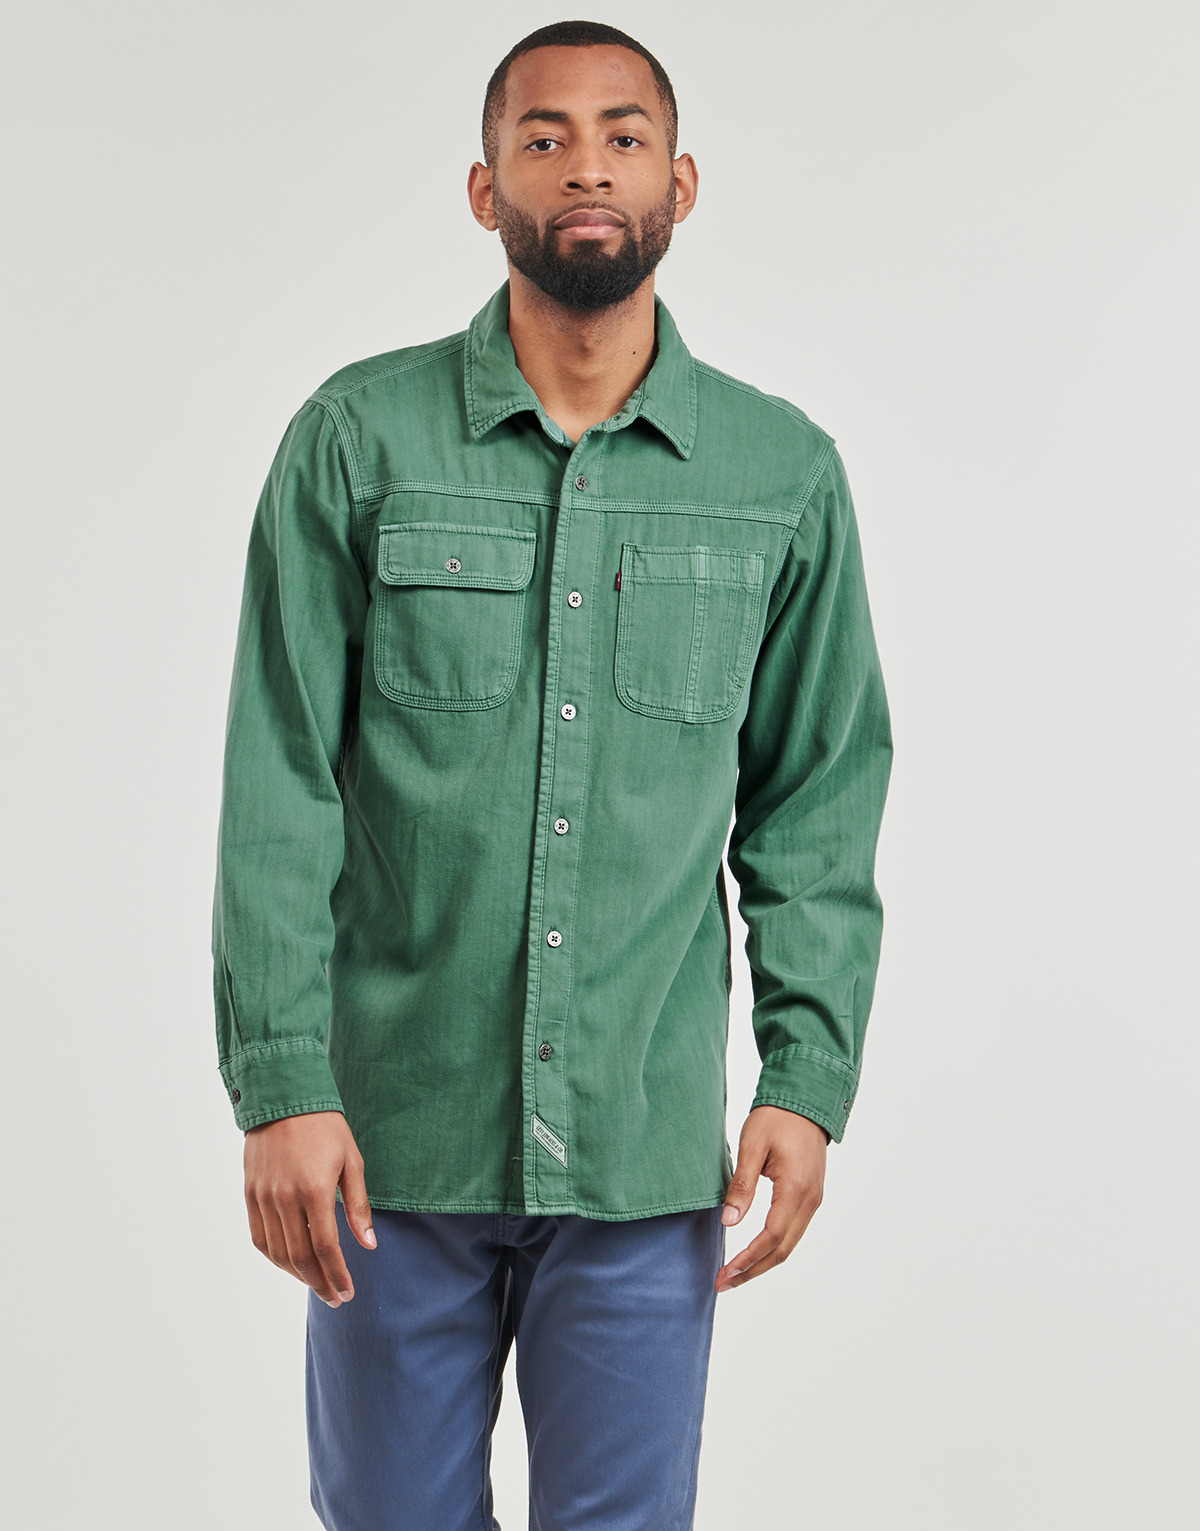 textil Hombre Camisas manga larga Levi's LS AUBURN WORKER Verde